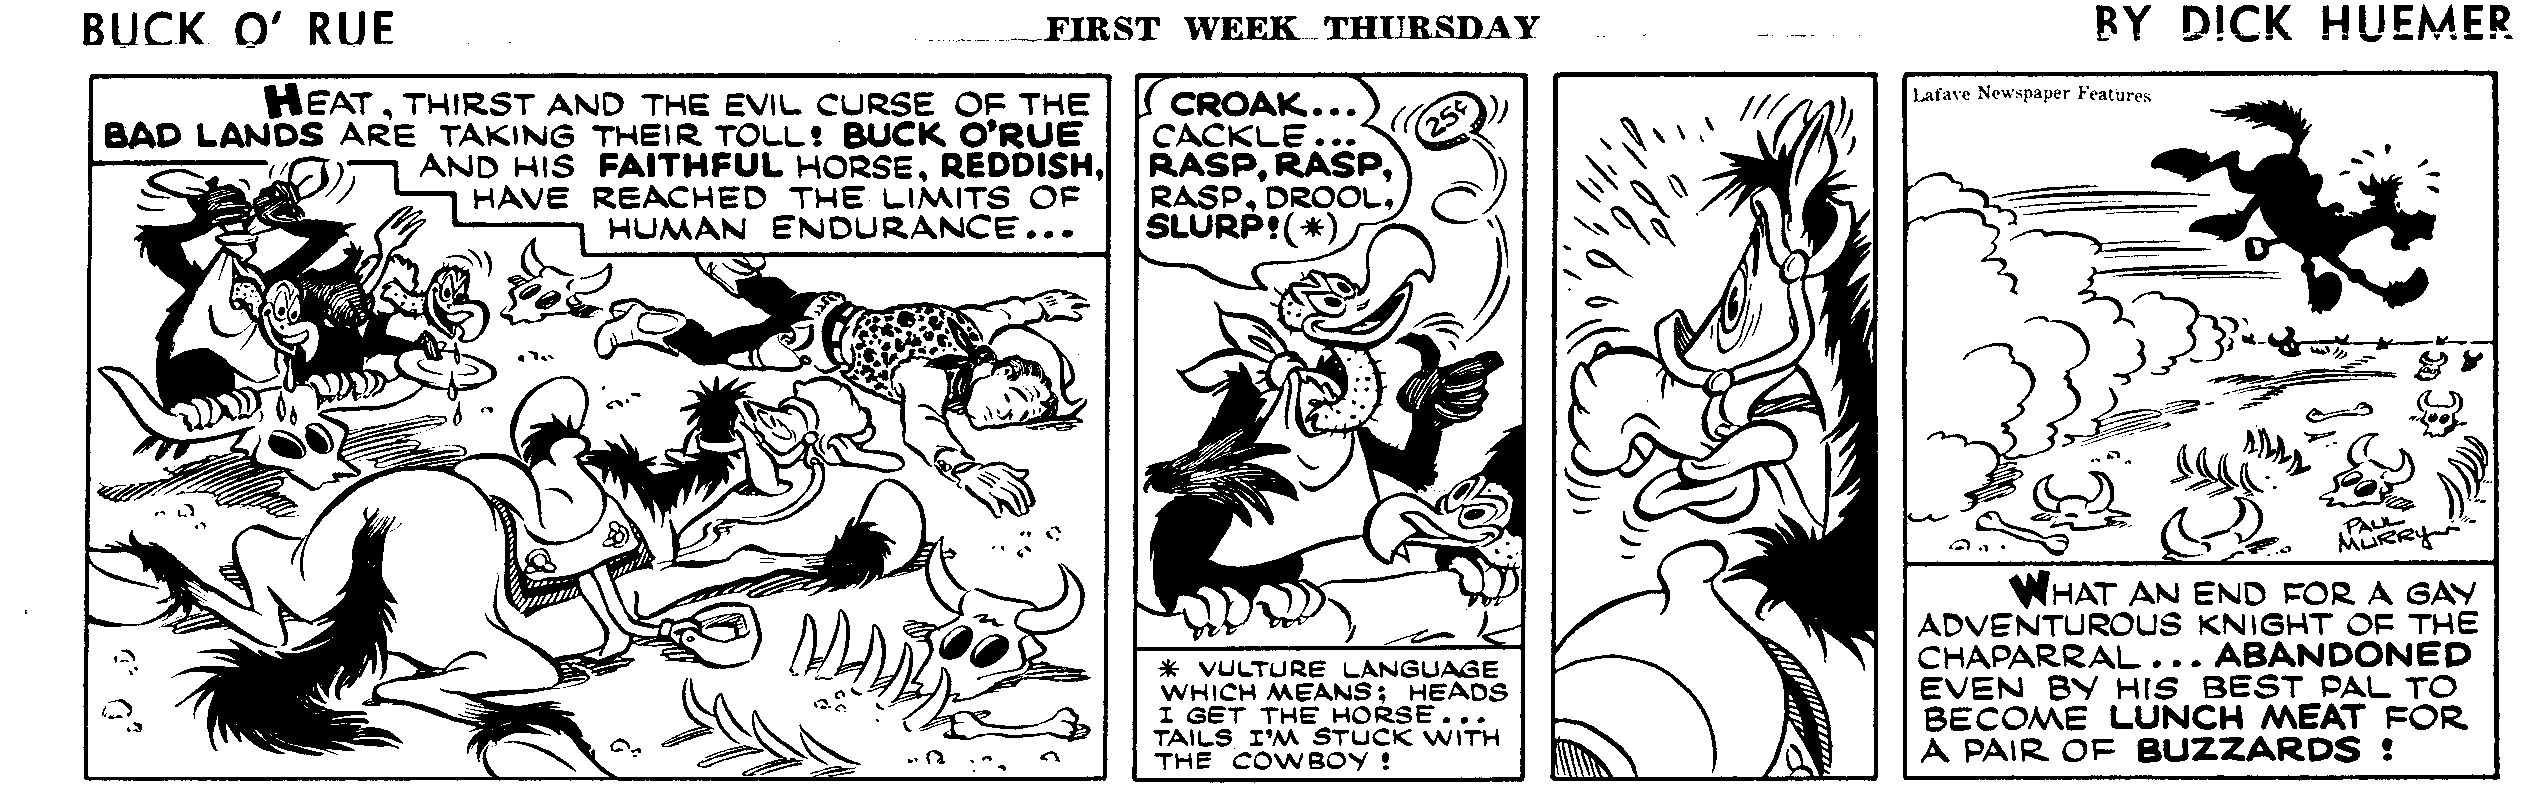 Thursday strip